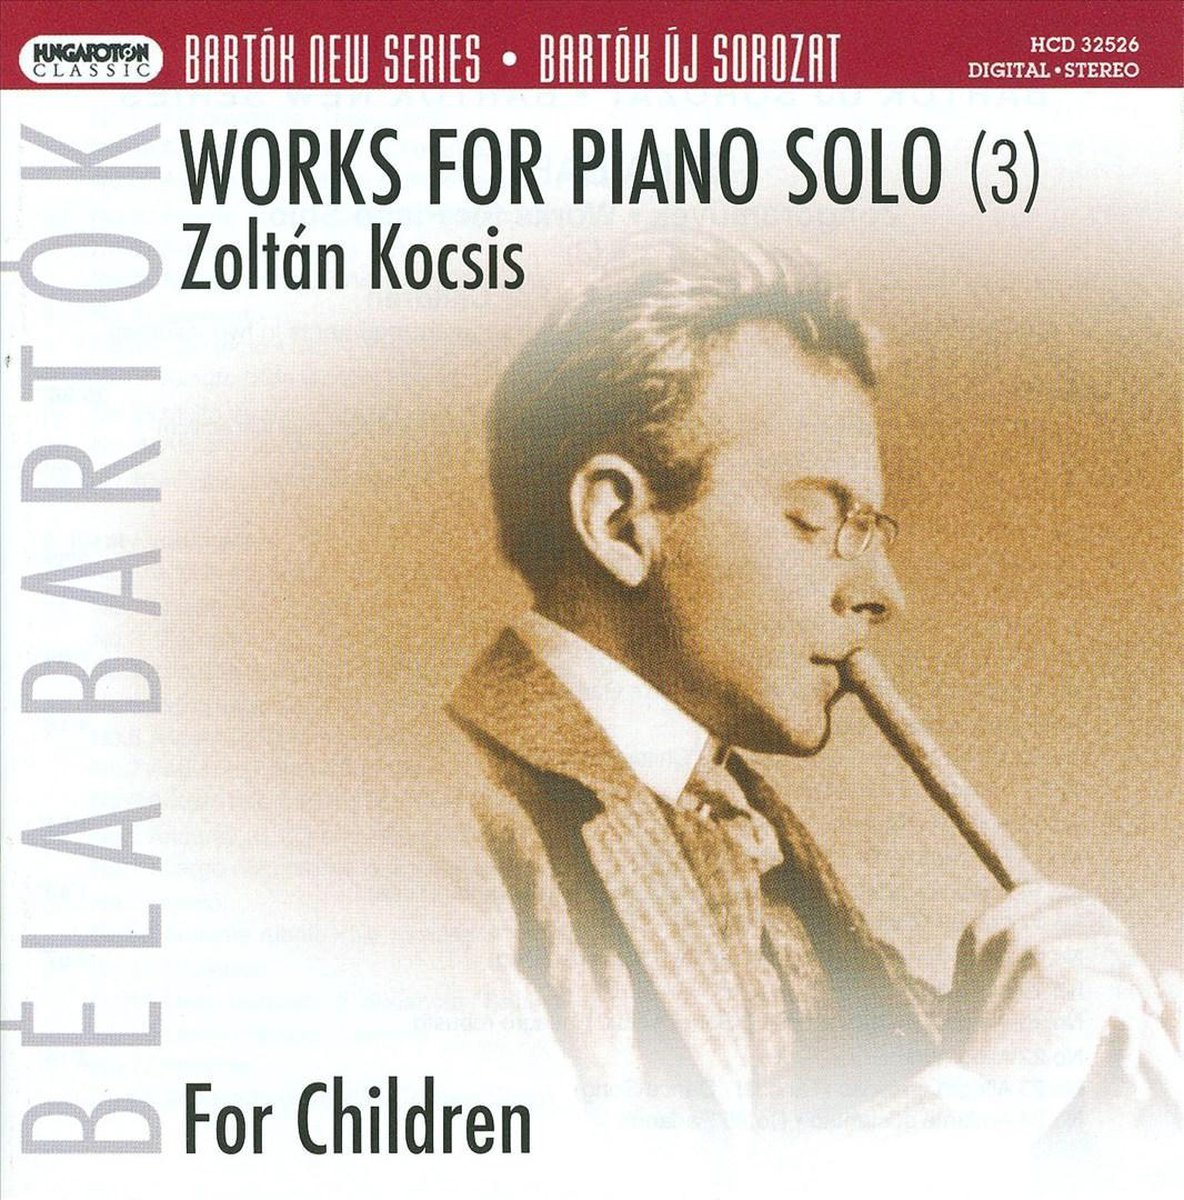 Bartok: Works for piano solo 3